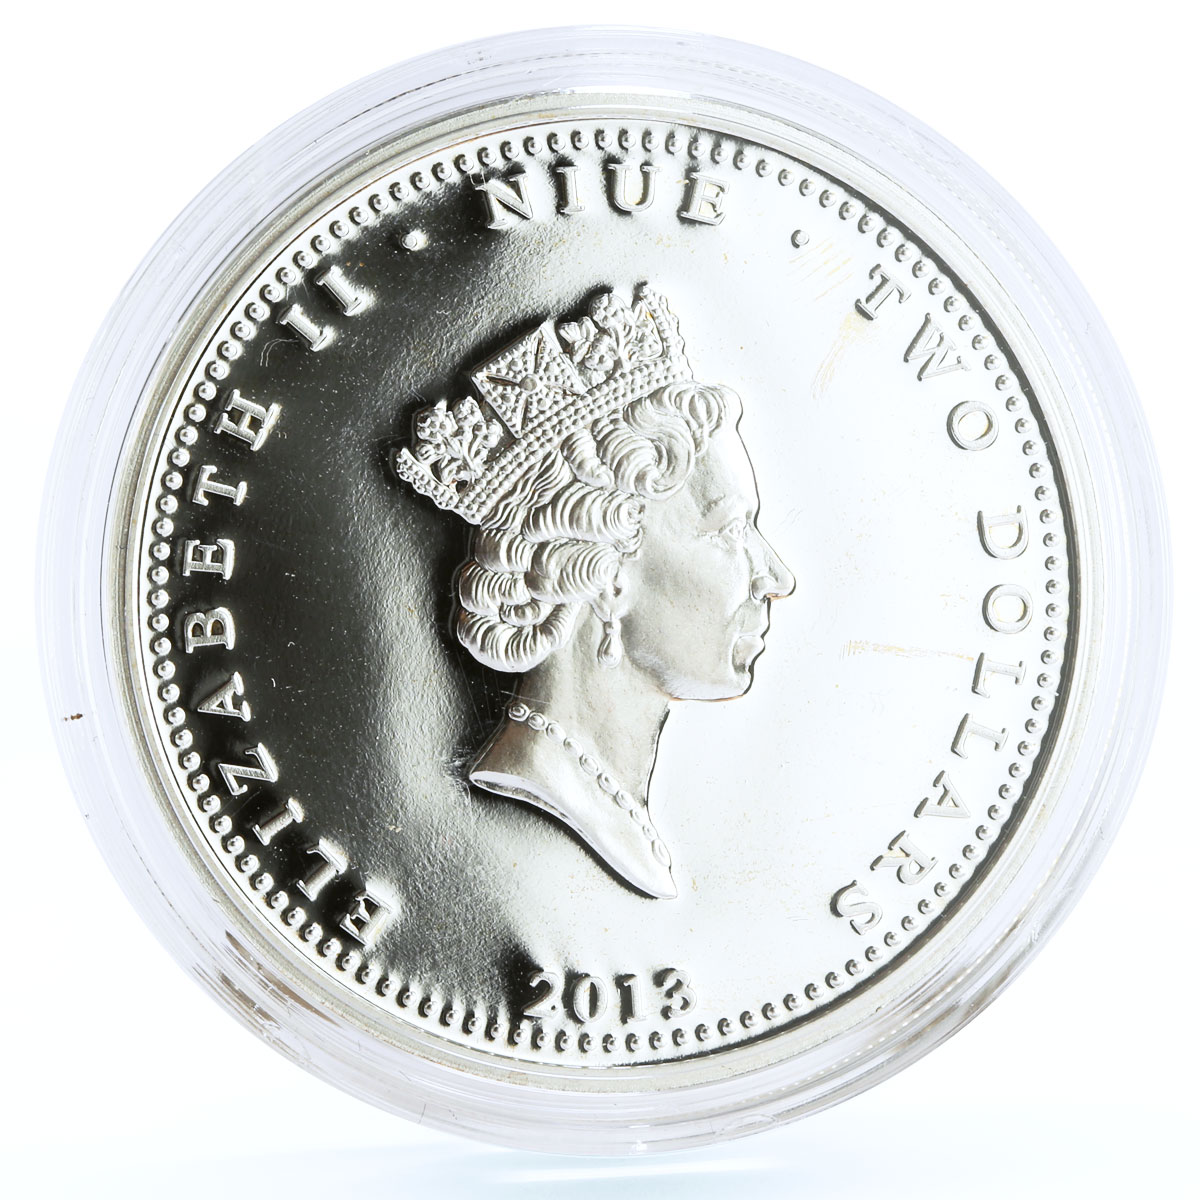 Niue 2 dollars Soviet Films Caucasian Style Shurik Nina proof silver coin 2013